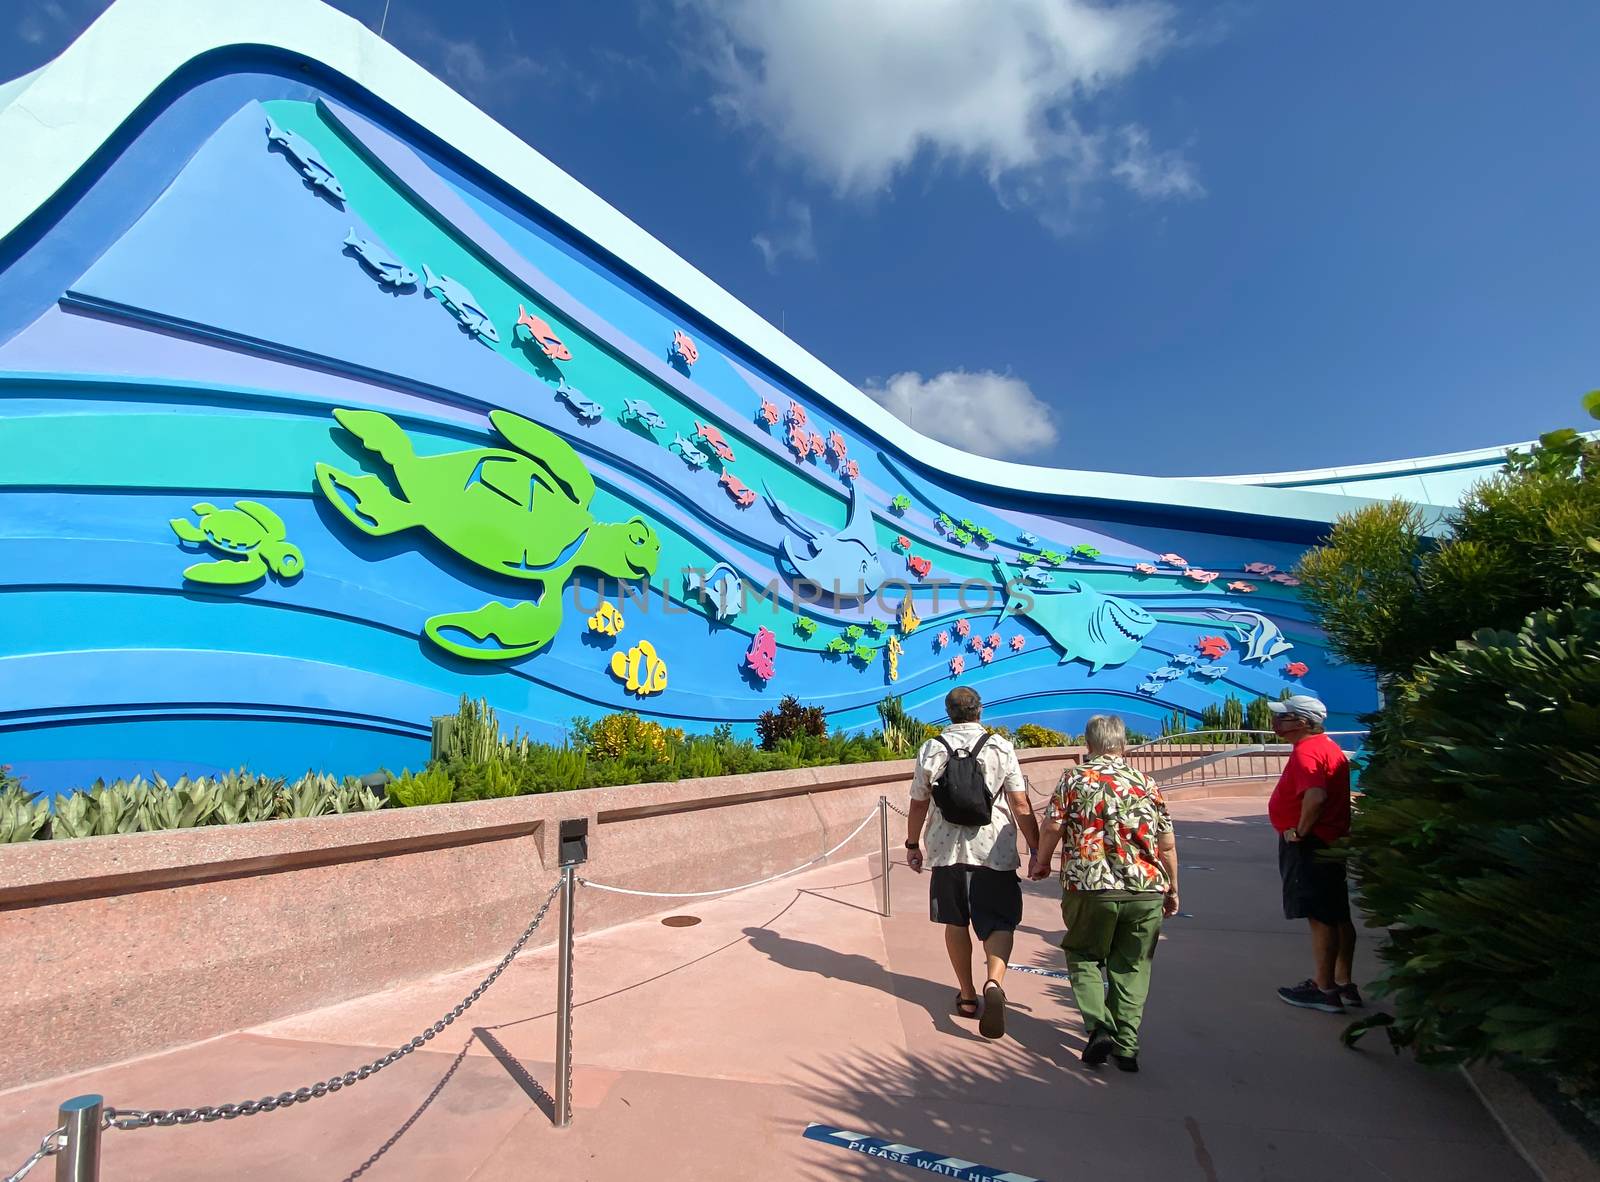 Orlando, FL/USA - 10/14/20:  The exterior of the Living Seas Pavillion in EPCOT at Walt Disney World.